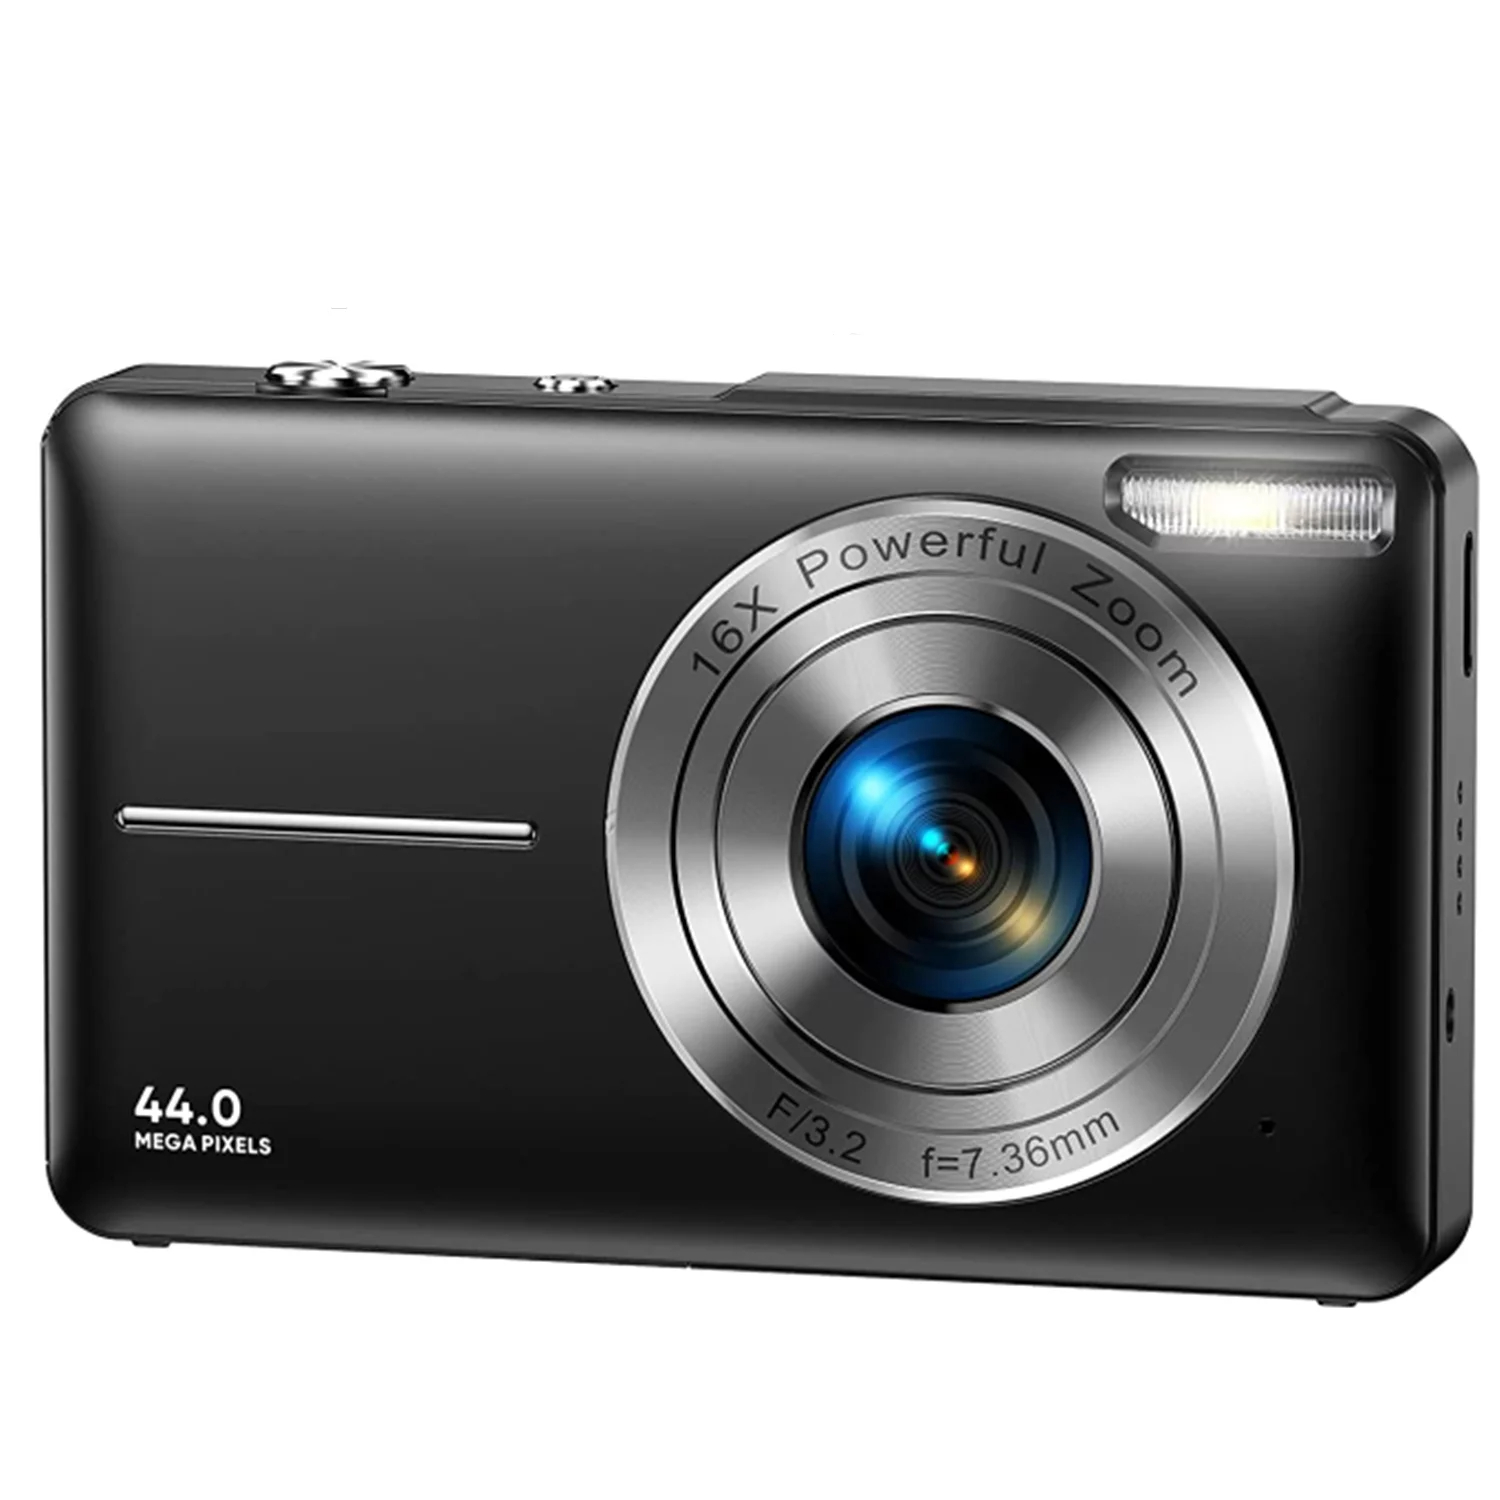 Melcam 01DC403 44.0 MP 1080P Digital Camera 16X Digital Zoom Compact Point and Shoot Camera, Black - image 1 of 4